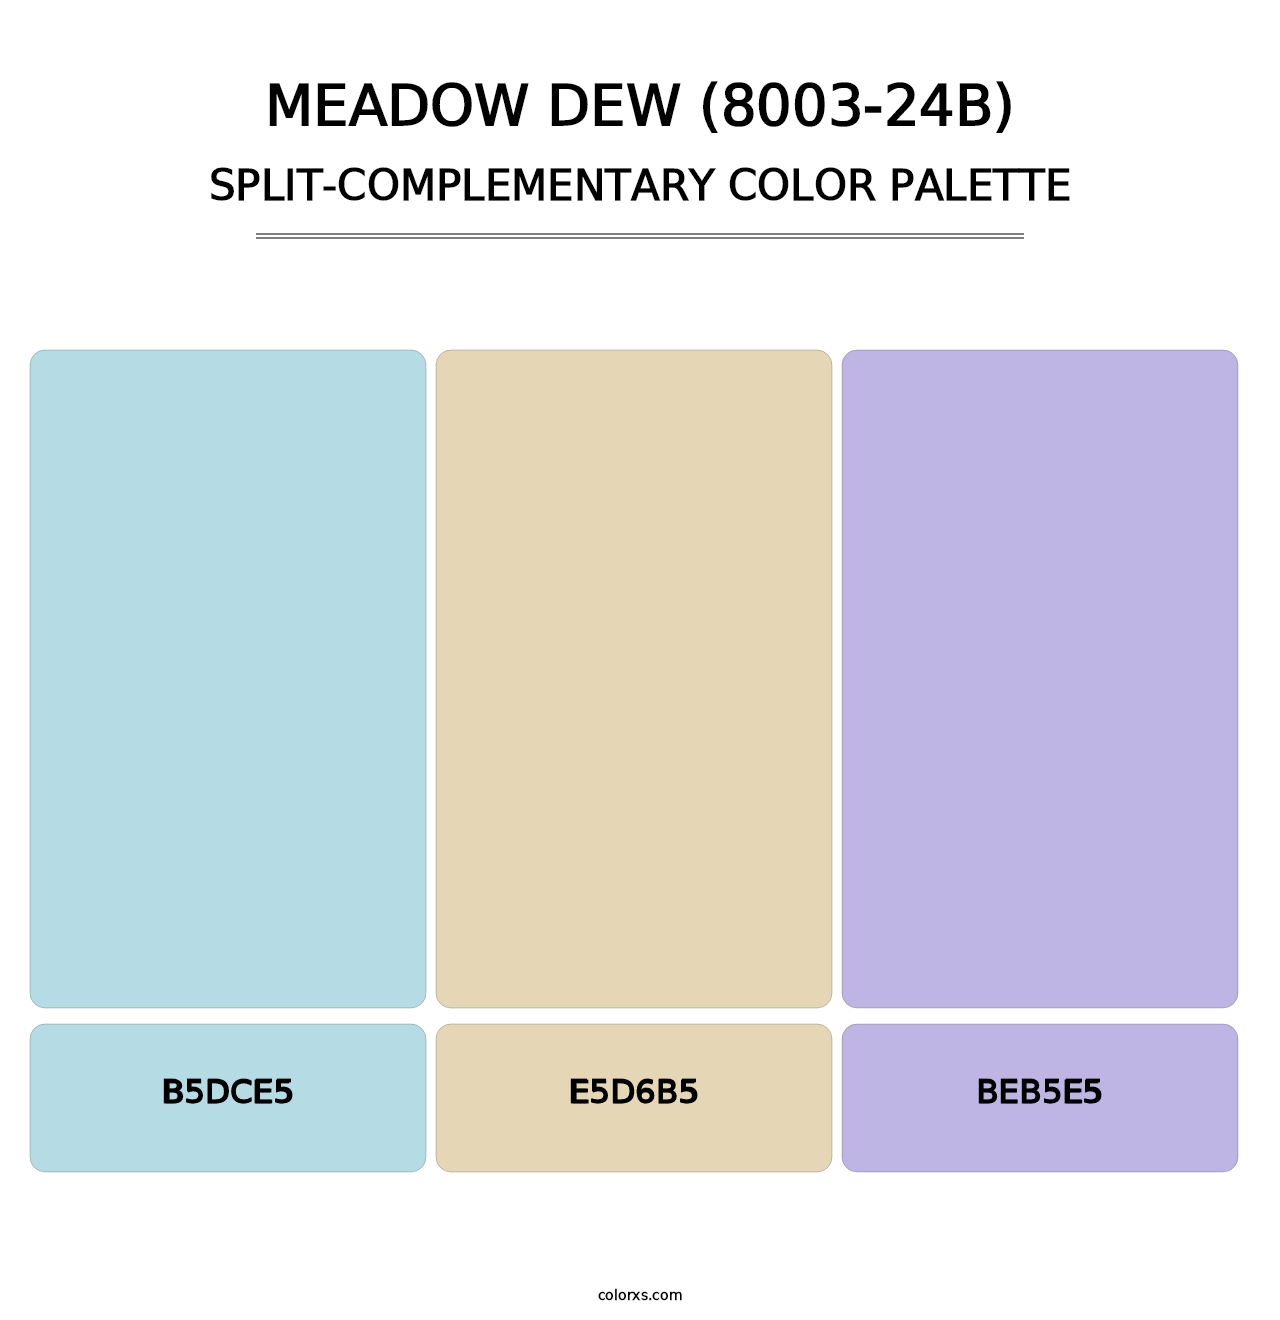 Meadow Dew (8003-24B) - Split-Complementary Color Palette